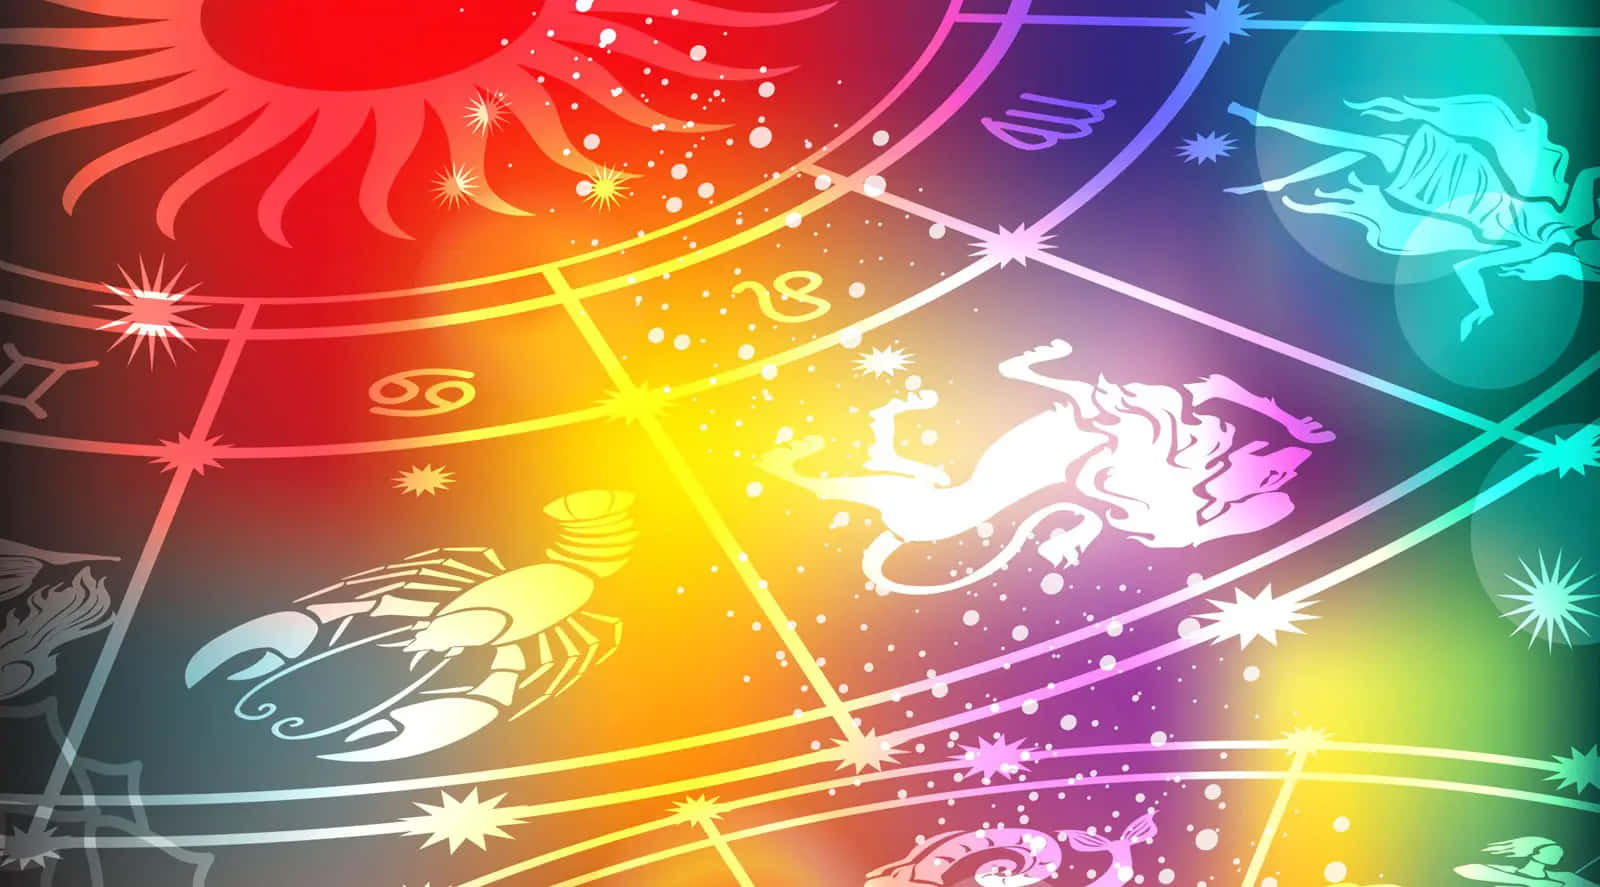 Illuminated Zodiac Signs in the Night Sky